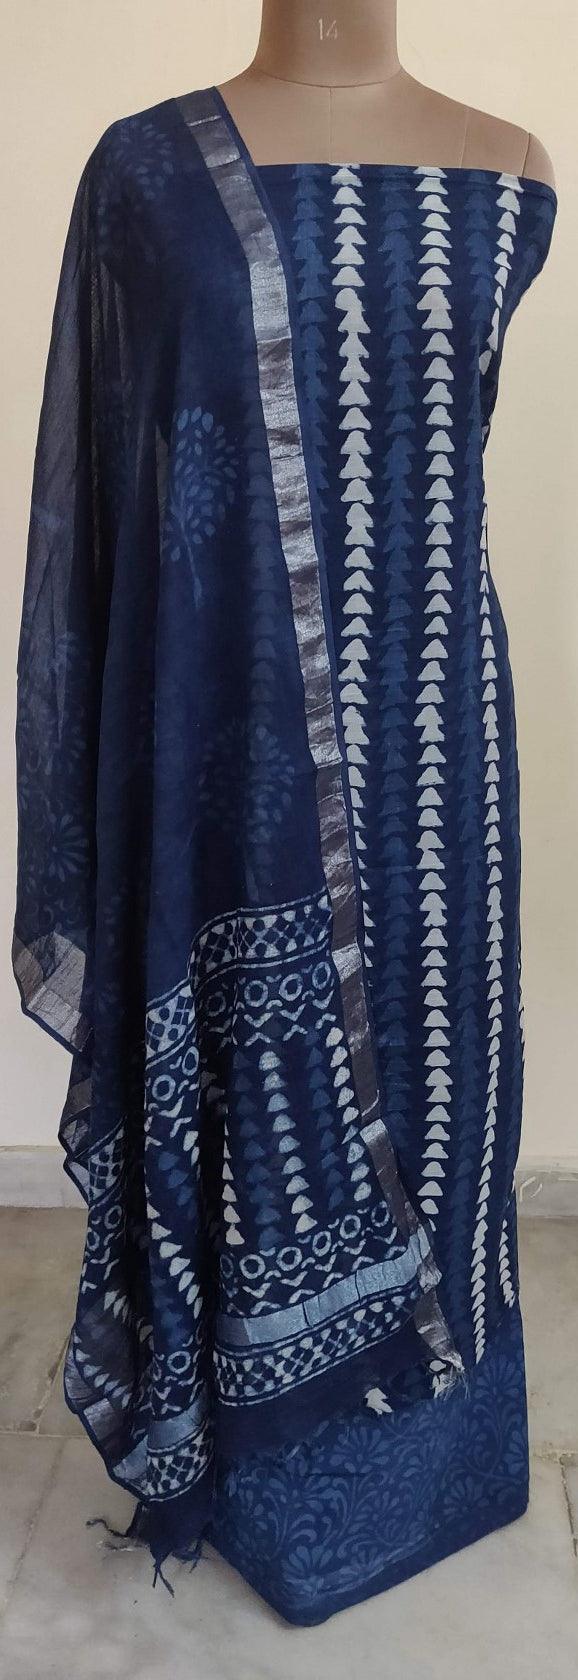 Indigo Blue Block Printed Linen Cotton Suit BPL01 - Ethnic's By Anvi Creations